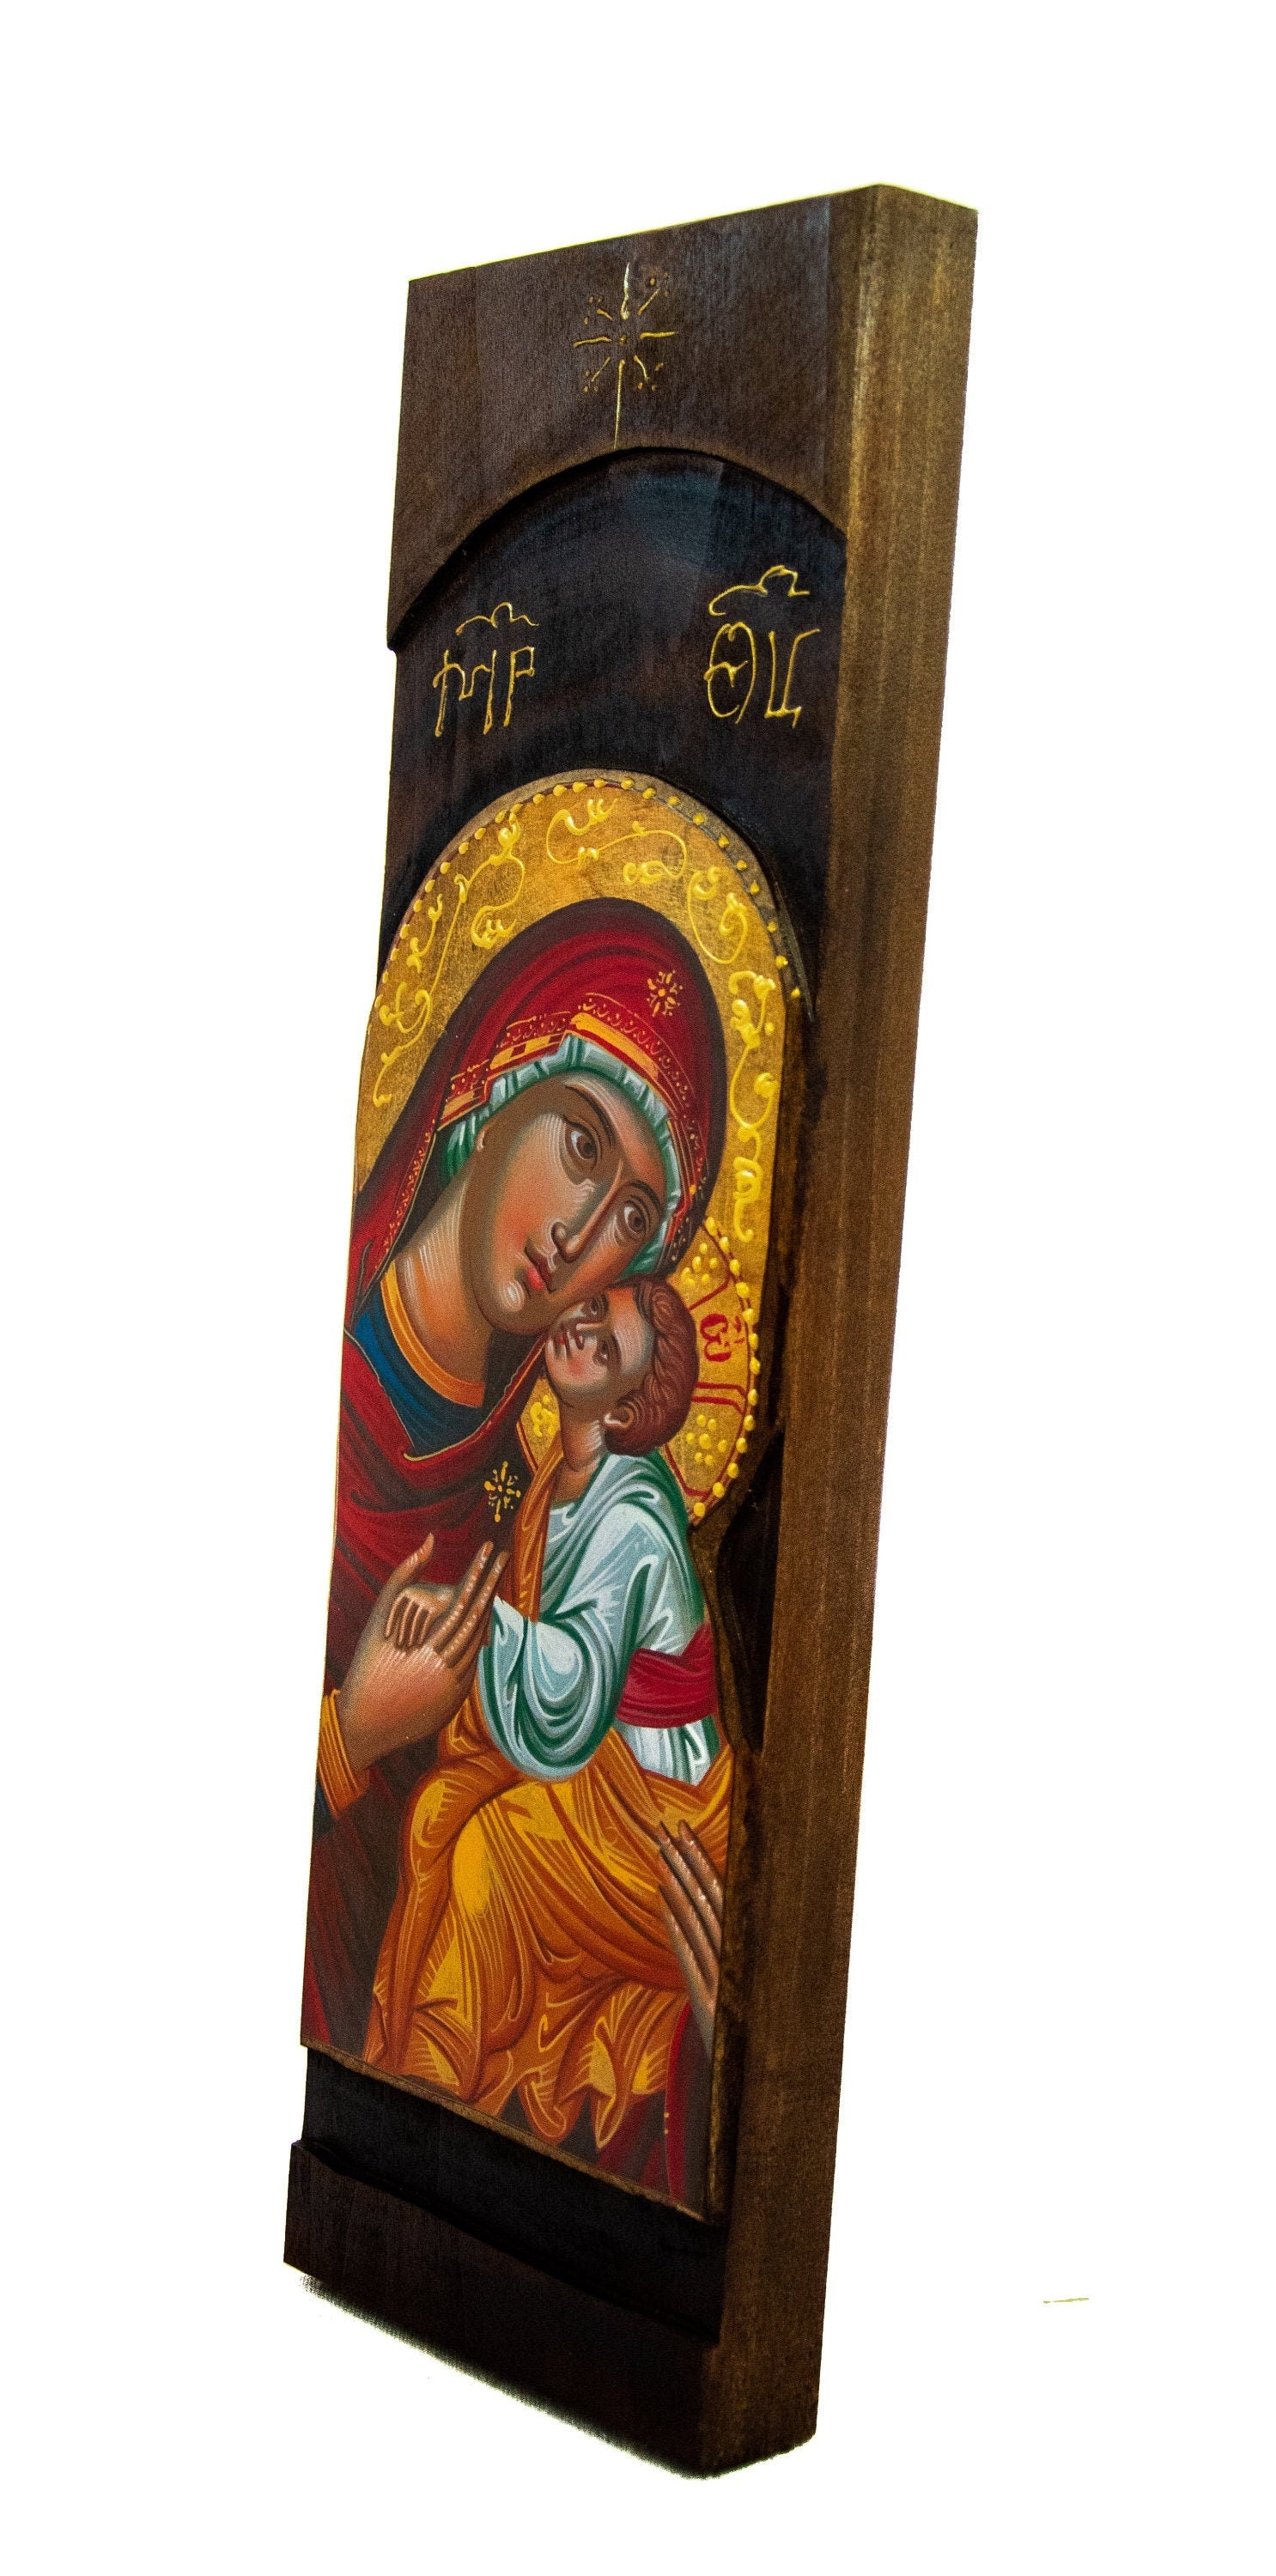 Virgin Mary icon Panagia Glykophilousa, Handmade Greek Orthodox Icon of Theotokos, Mother of God Byzantine art wall hanging wood plaque TheHolyArt